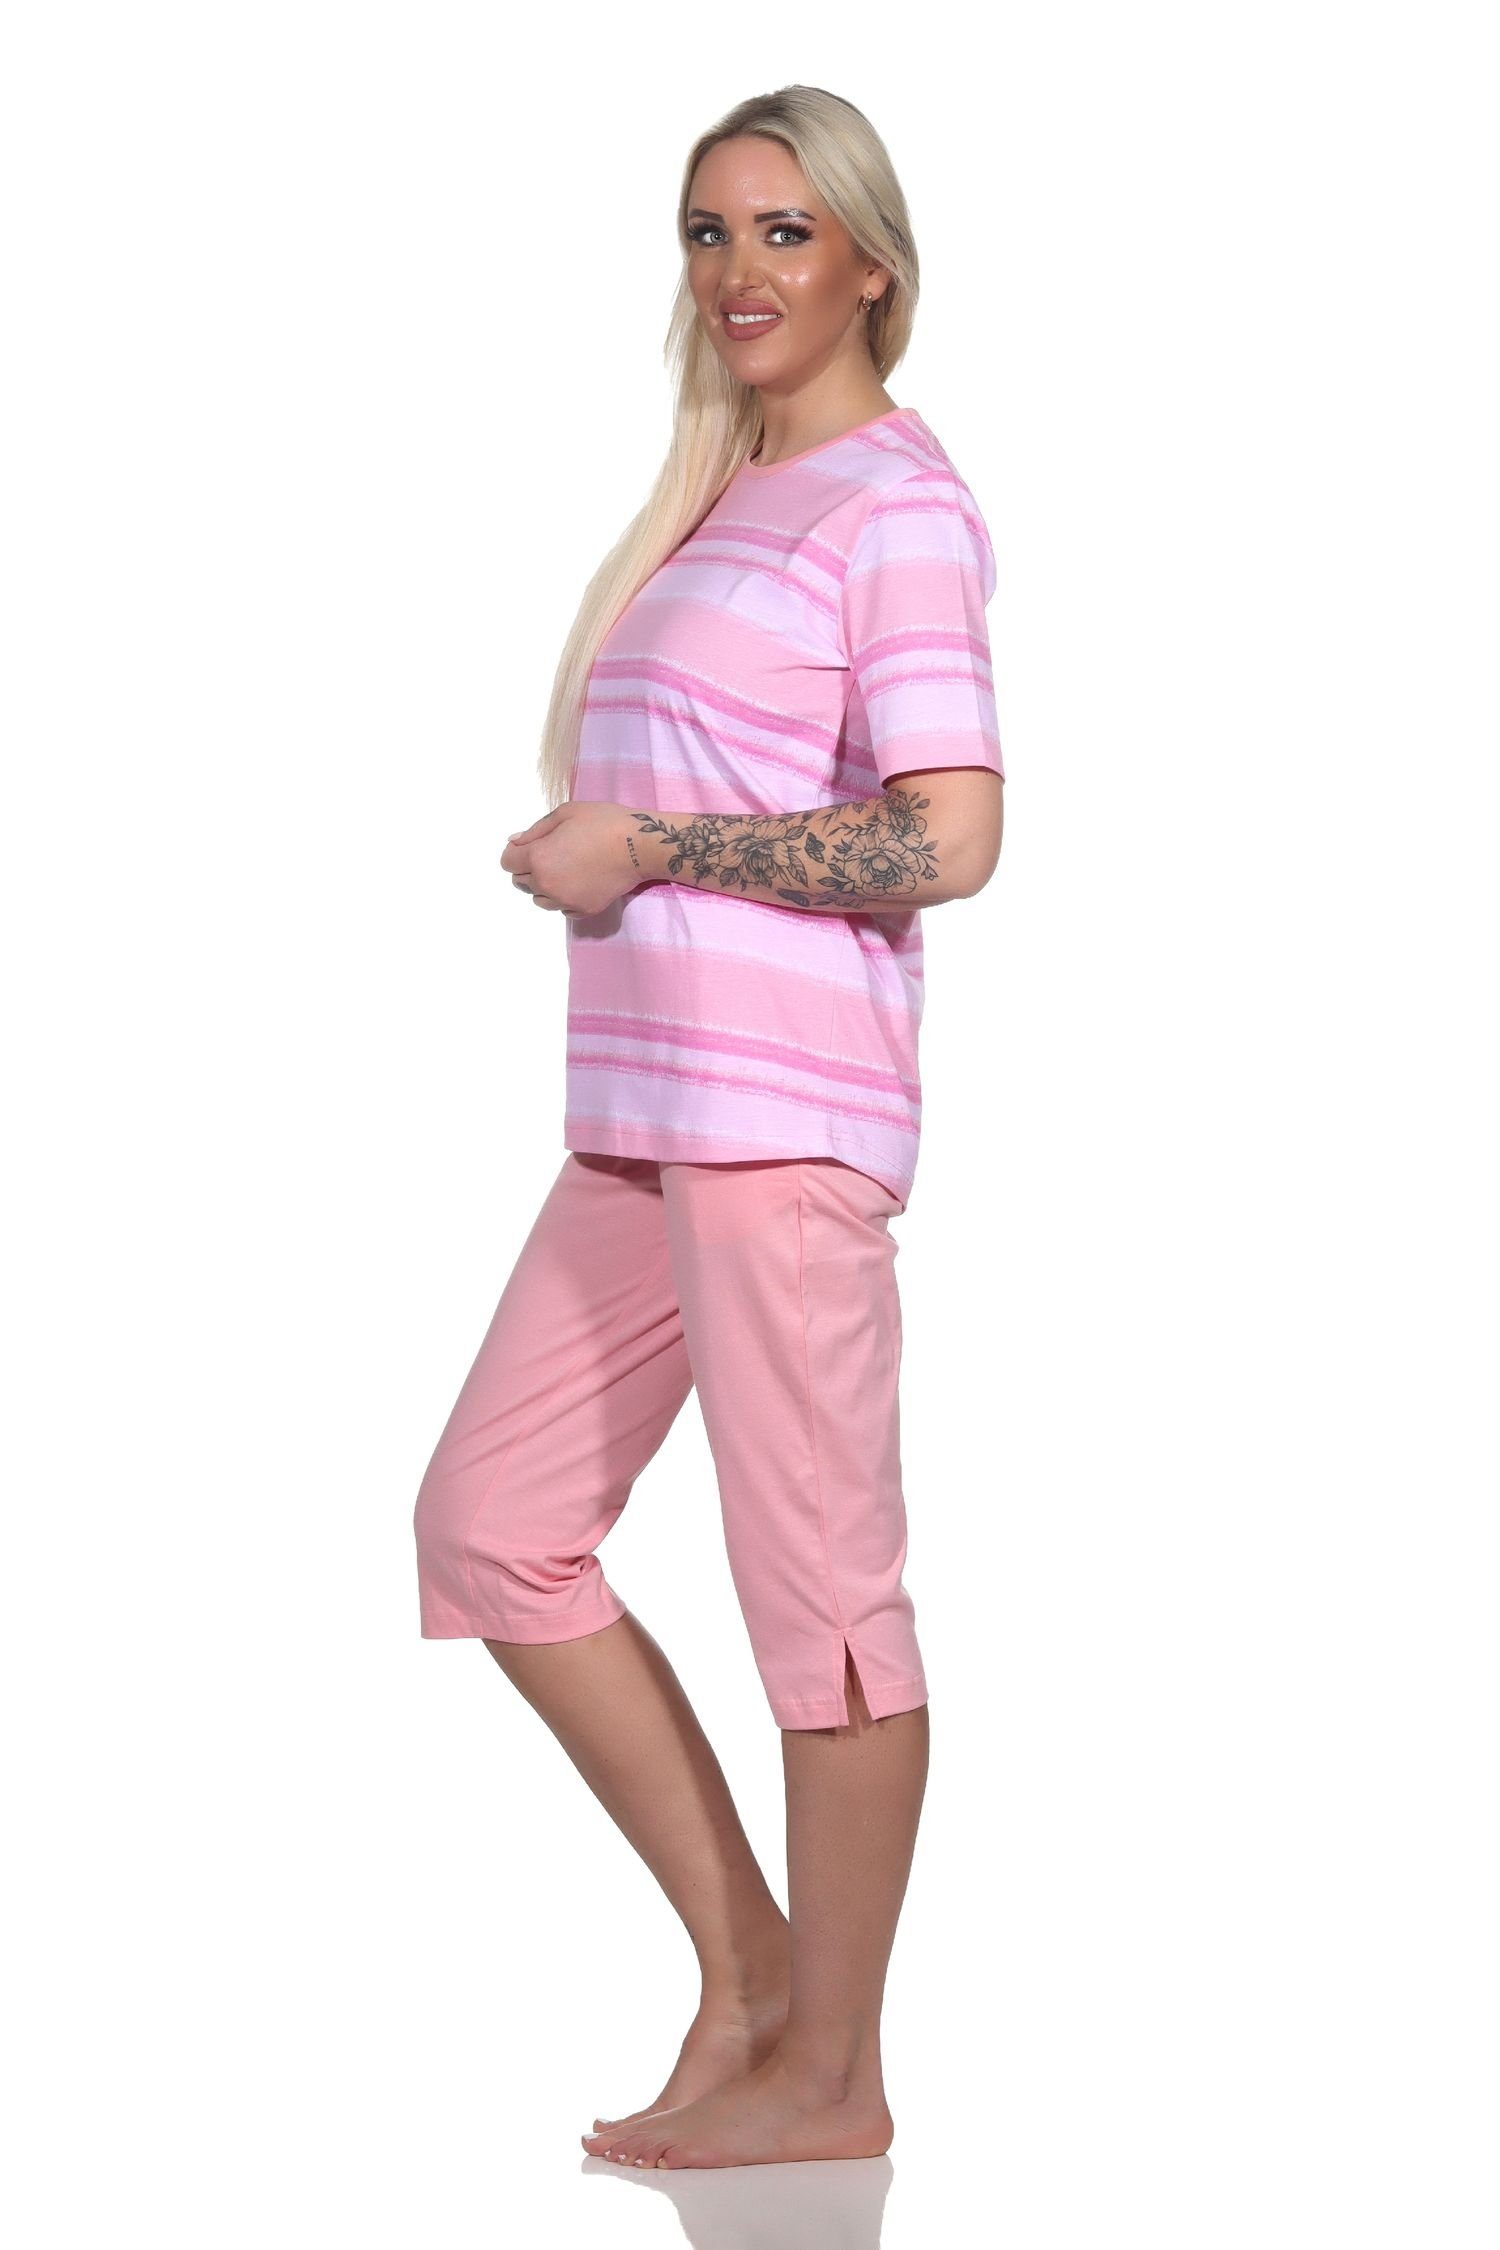 Normann Pyjama Damen Capri Schlafanzug Streifen im farbenfrohen Pyjama Look rosa kurzarm